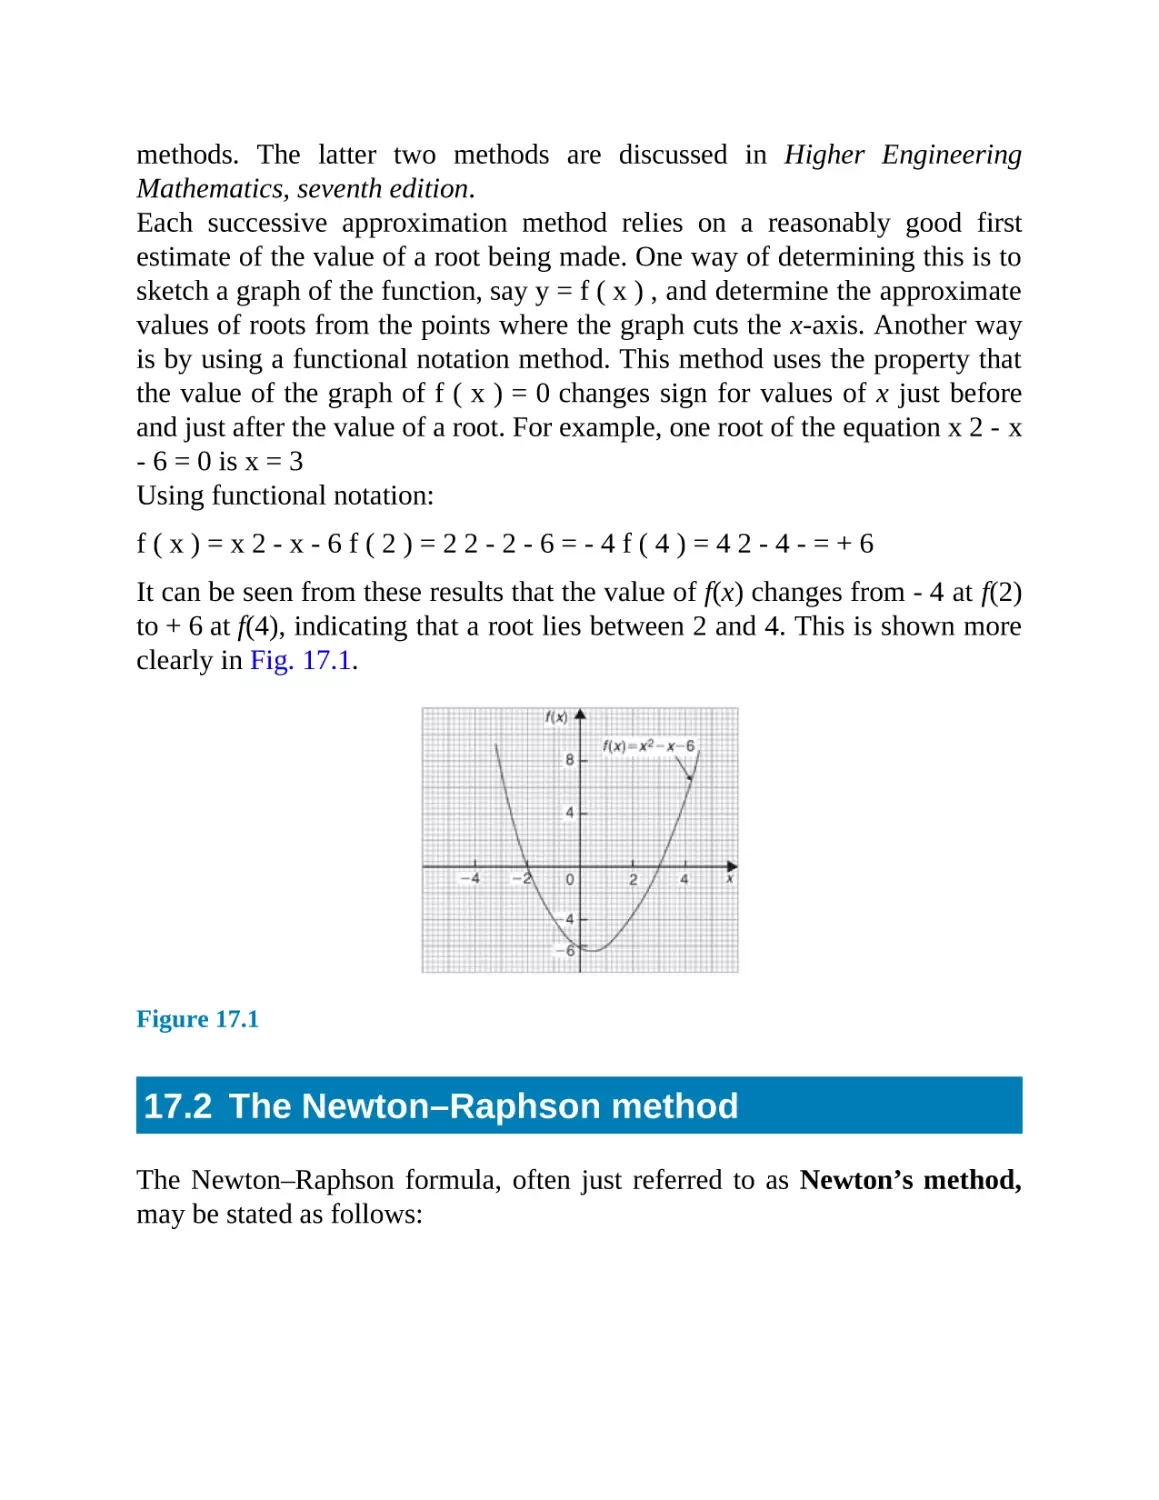 17.2 The Newton–Raphson method